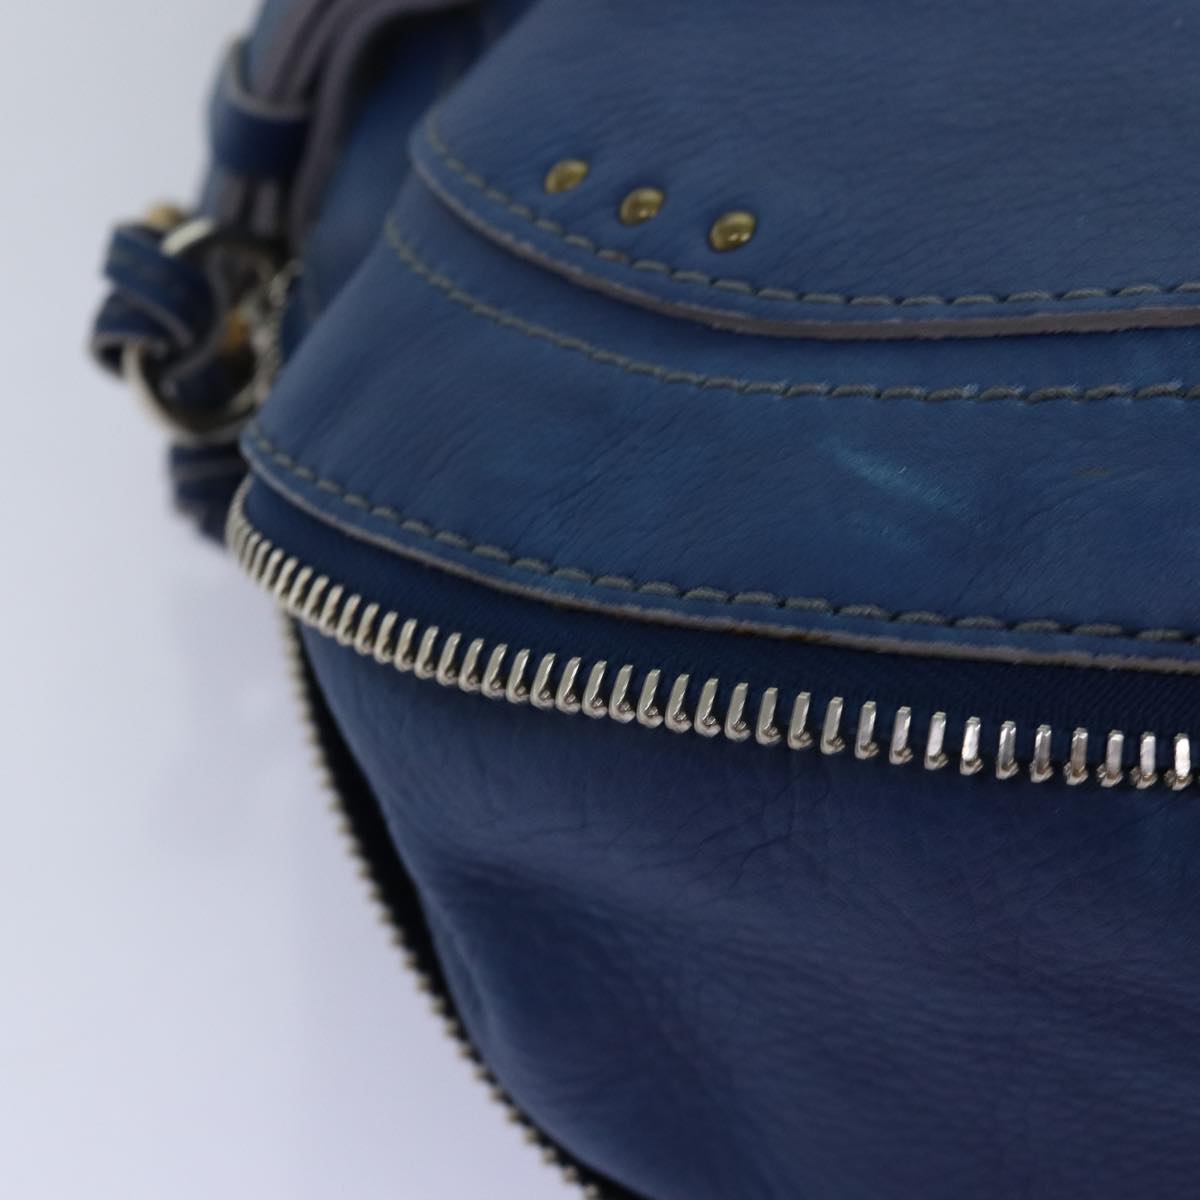 Chloe Paddington Shoulder Bag Leather Blue Auth kk230